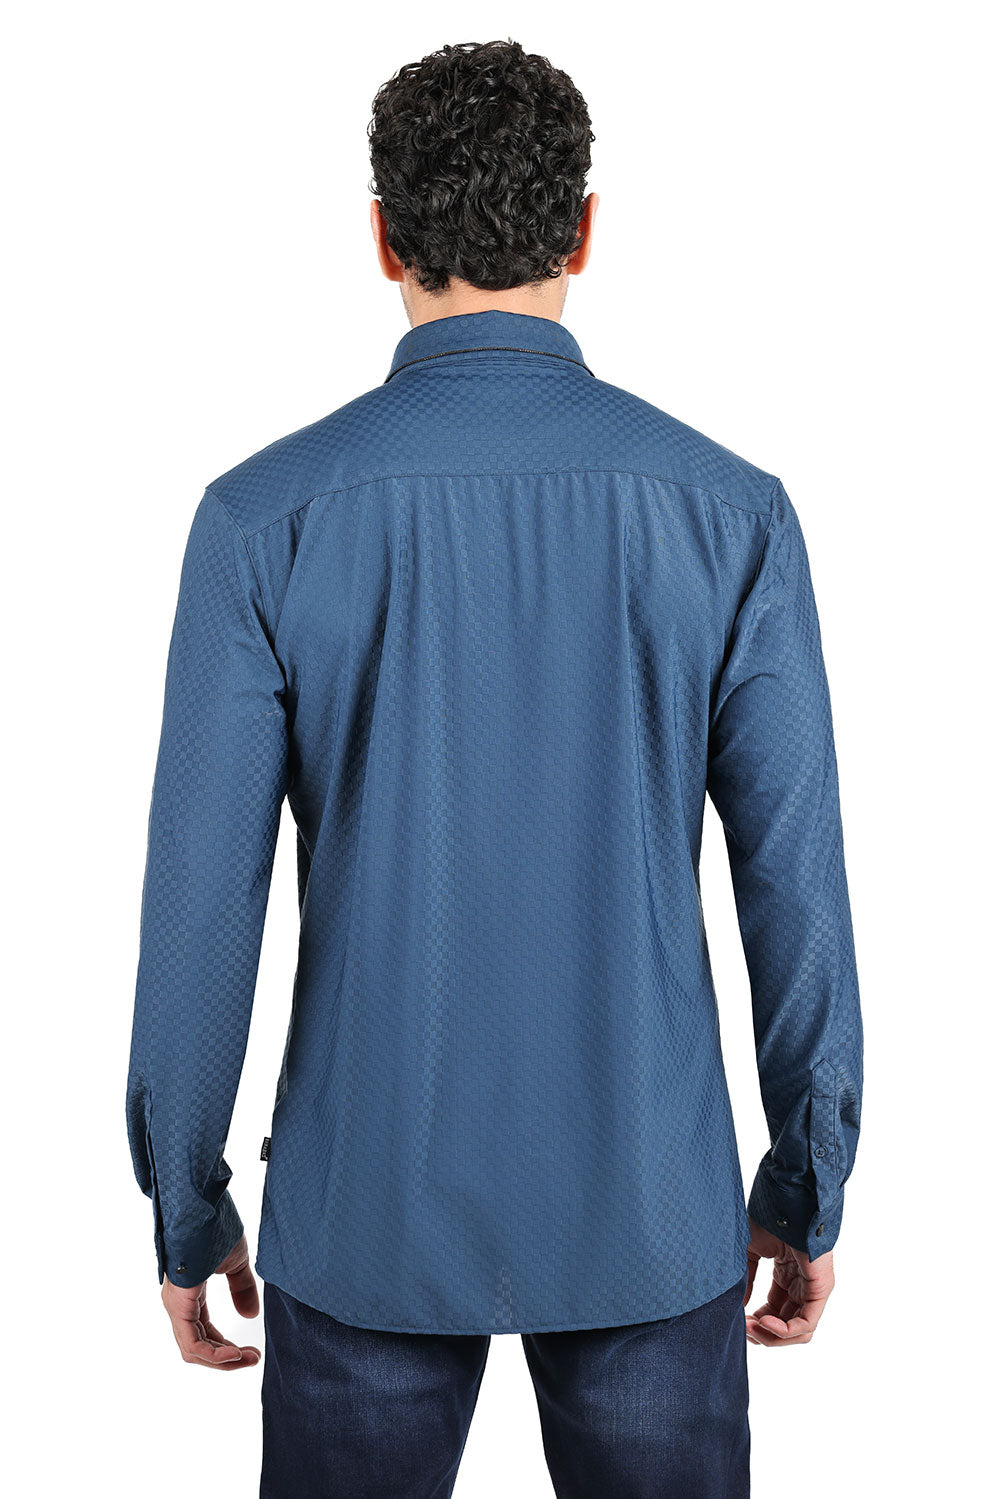 Barabas Men's Premium Solid No Stitches Long Sleeves Shirts 2B403 